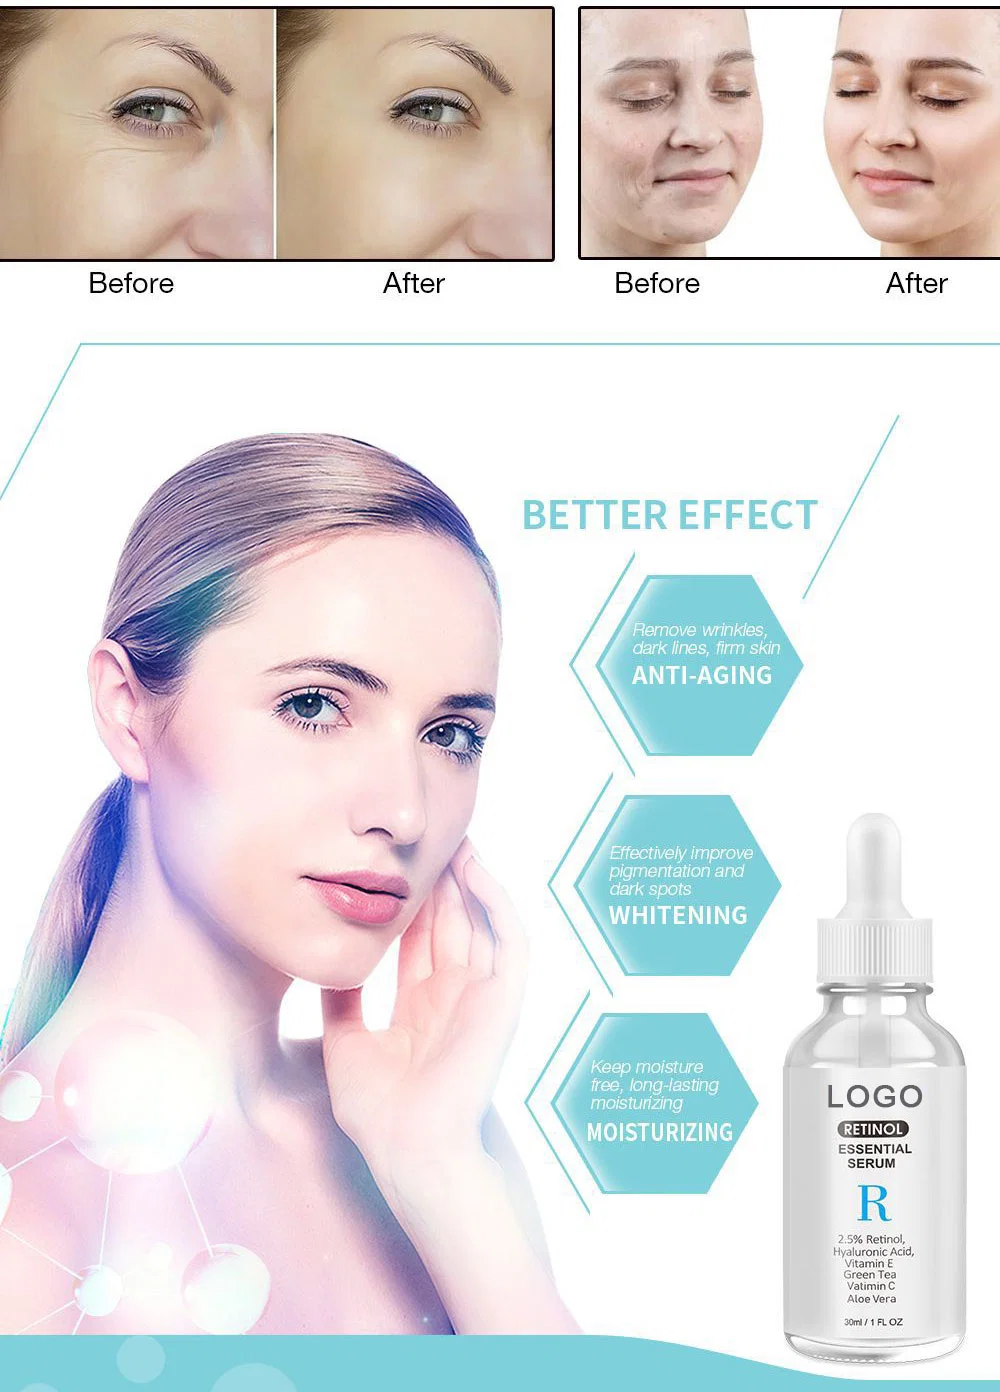 Beauty Cosmetics Skin Care Anti-Aging Moisturizer Whitening Vatimin C Retinol Essential Serum